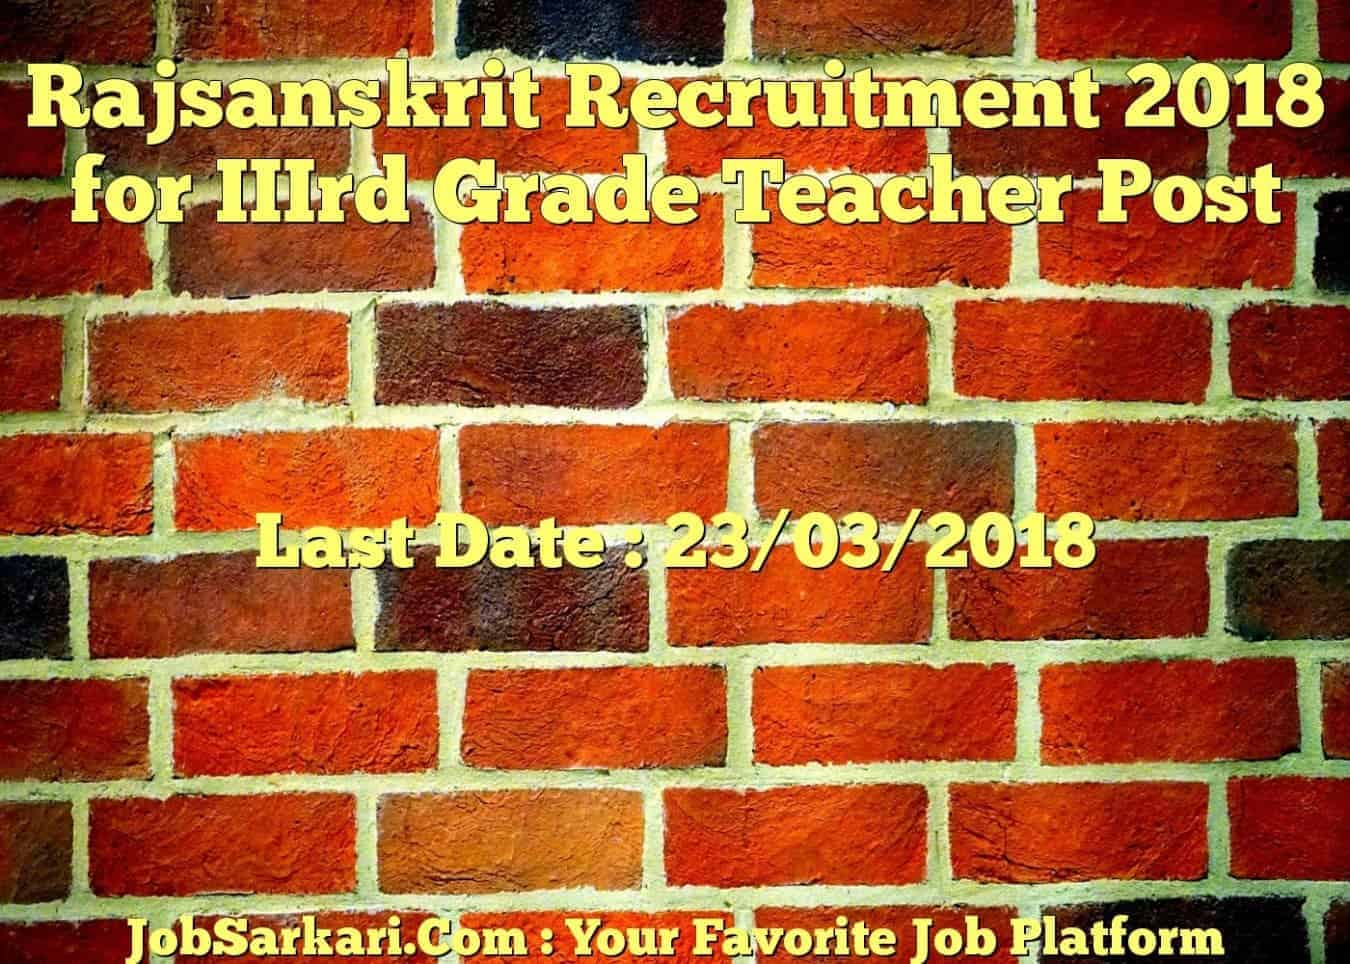 Rajsanskrit Recruitment 2018 for IIIrd Grade Teacher Post